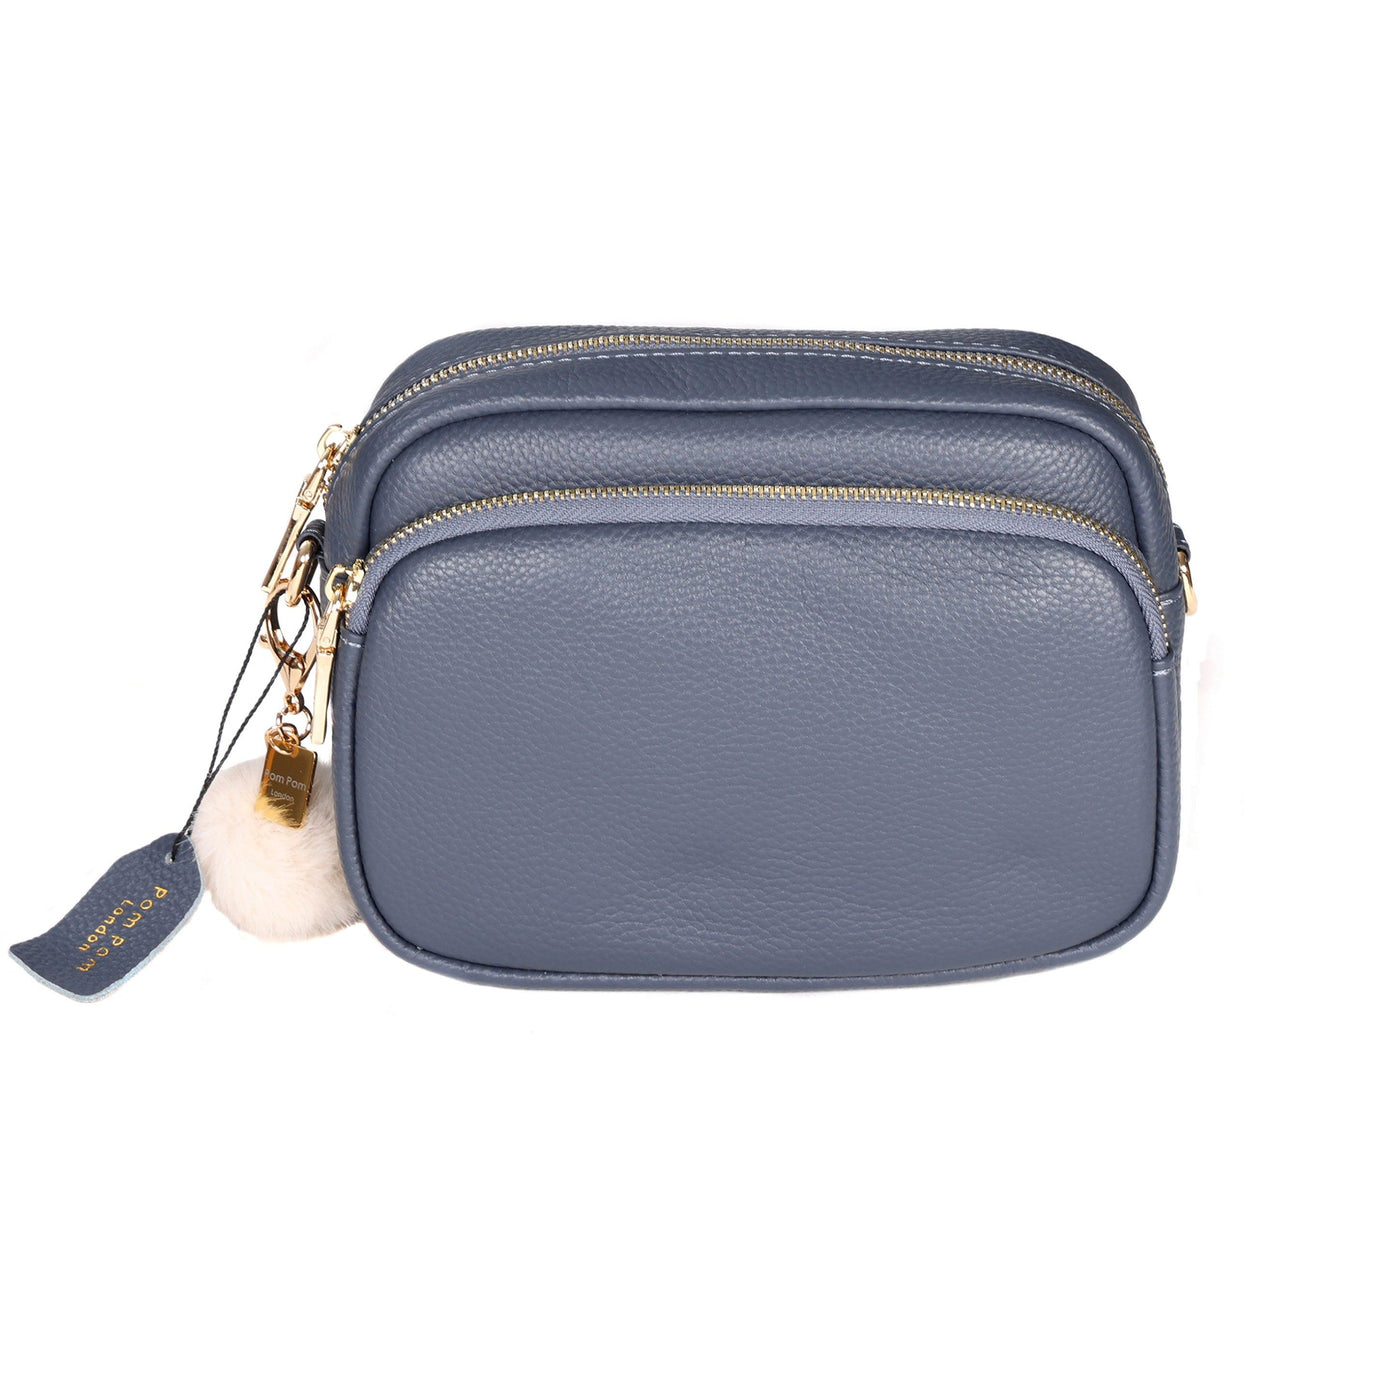 Mayfair Bag Slate Blue & Accessories - Pom Pom London